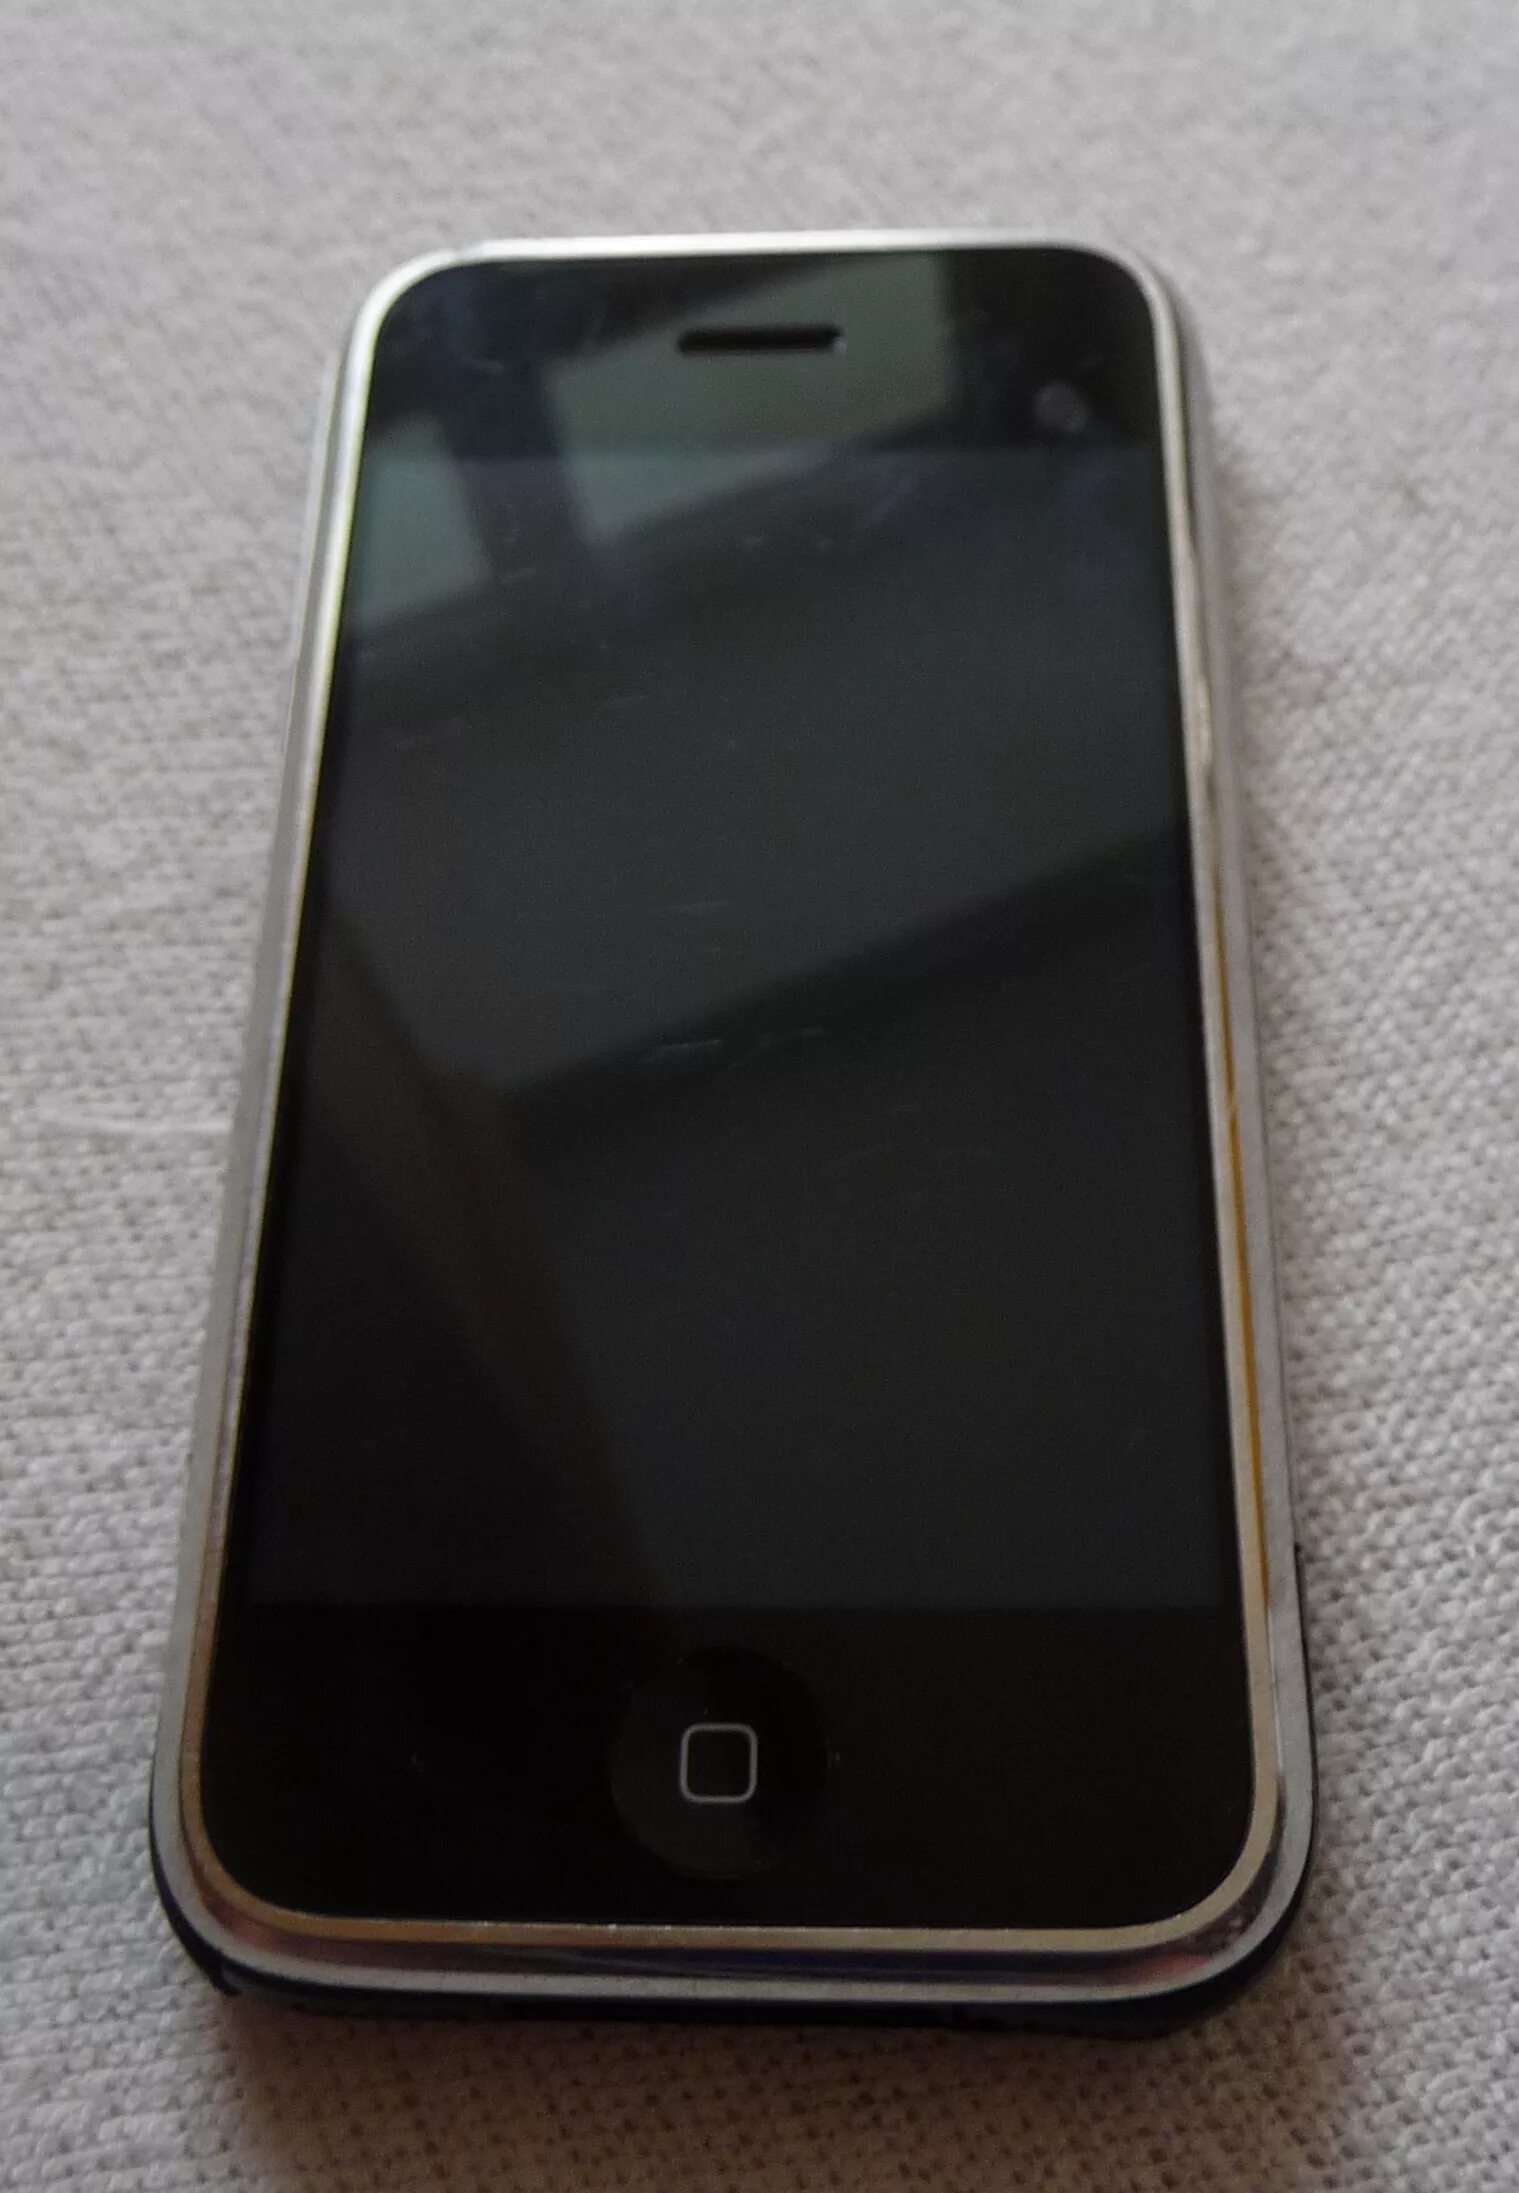 Айфон 2 2 8. Apple iphone 2g. Apple iphone 2. Apple iphone 2g 8gb. Айфон 2g черный.